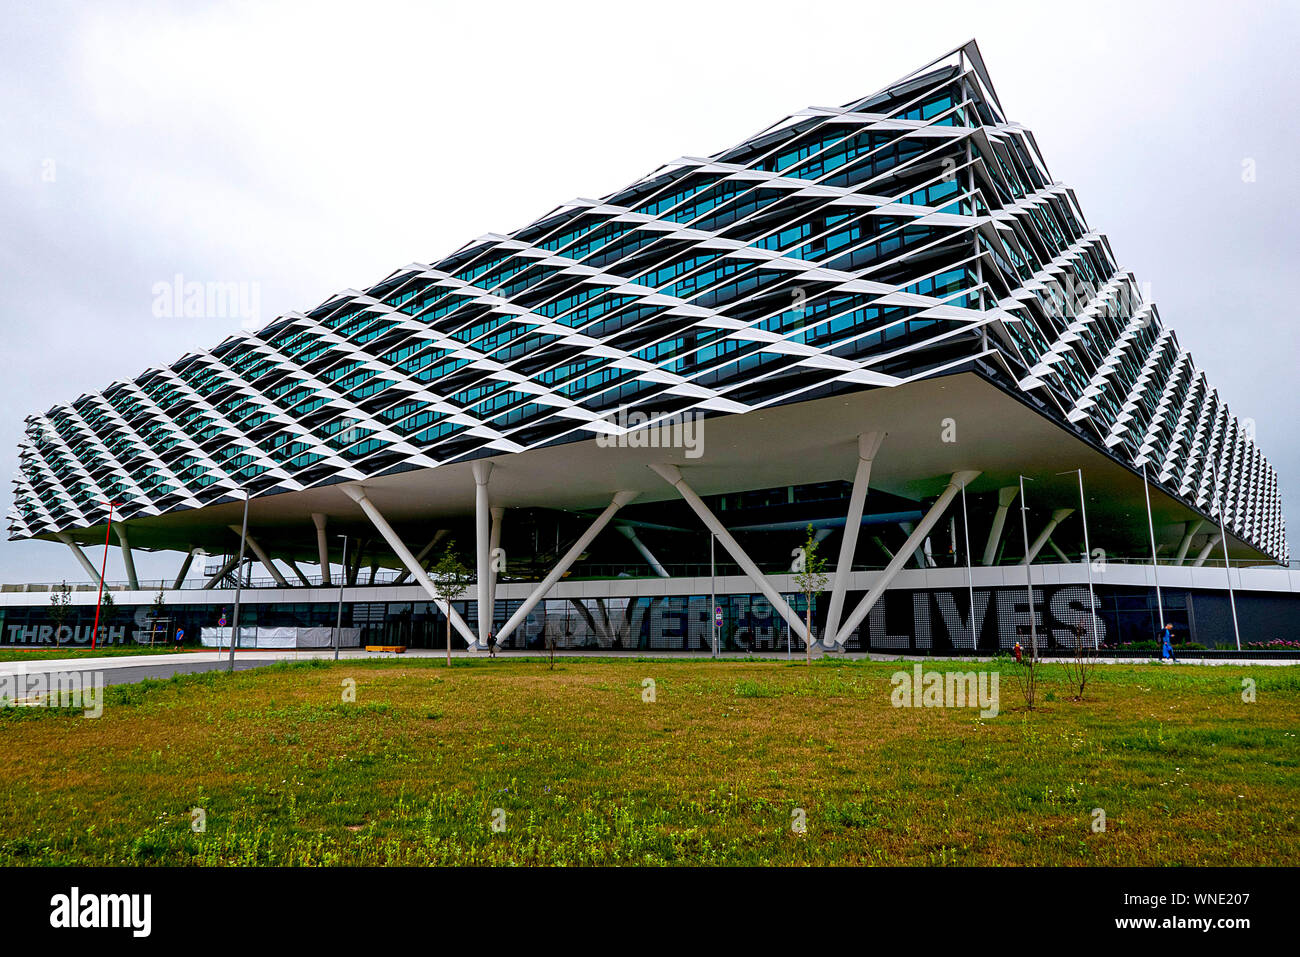 Adidas Arena, adidas AG's administrative building reminiscent of a football  stadium football stadium, has a size